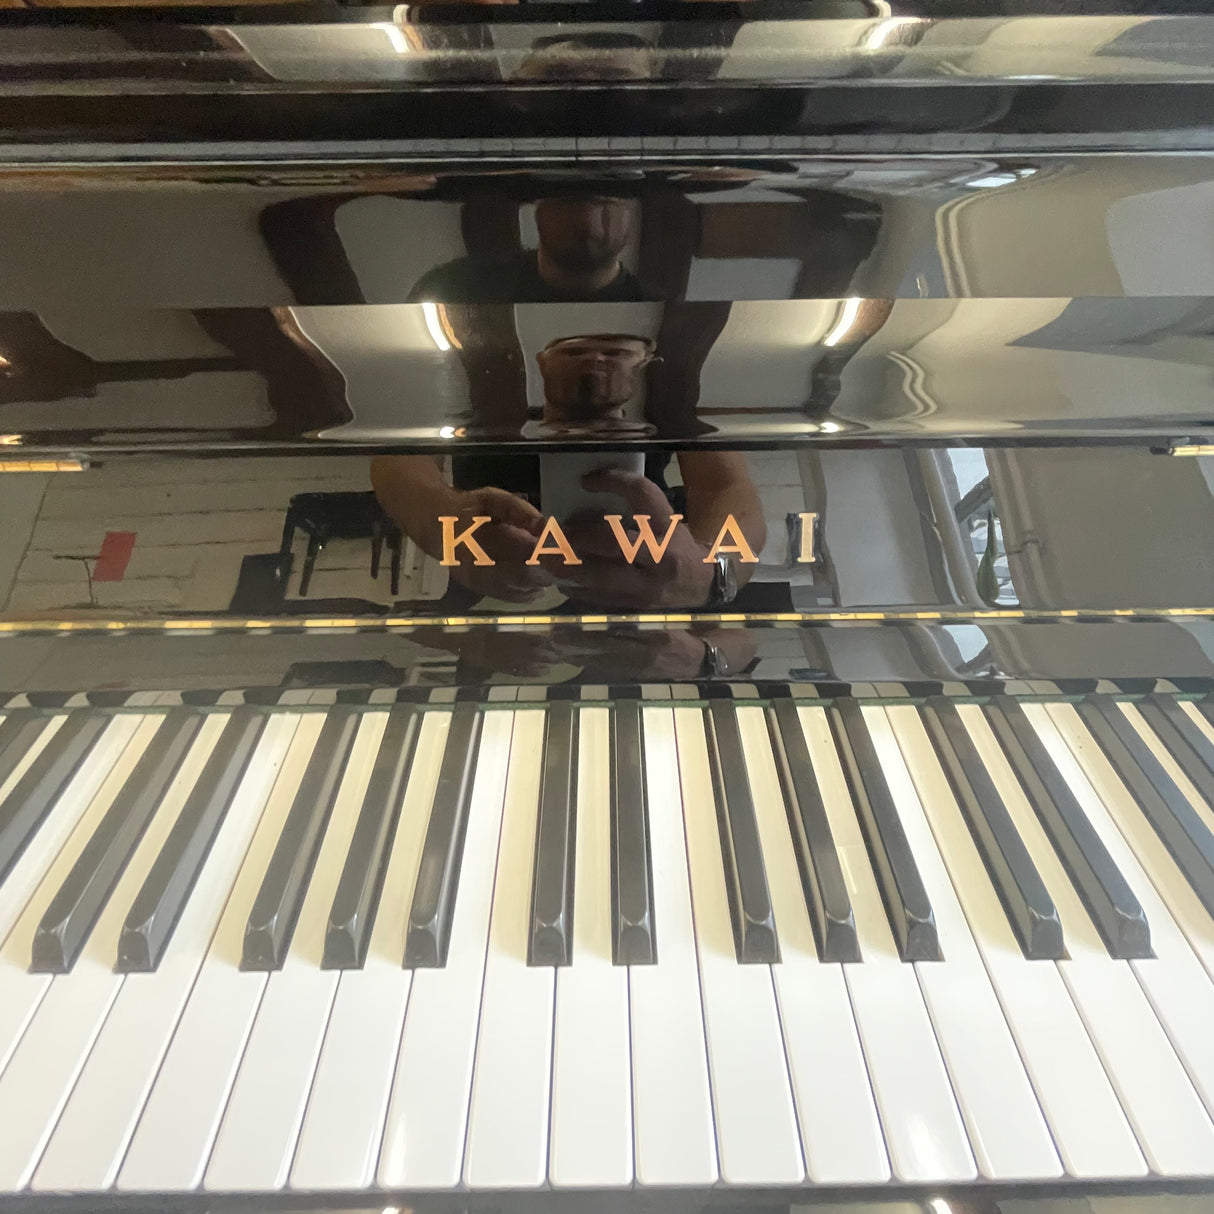 Kawai Klavier BL 12 Konzert 123 cm schwarz pol. Occasion Bj. 1978, guter Zustand (gebraucht) - Musik-Ebert Gmbh